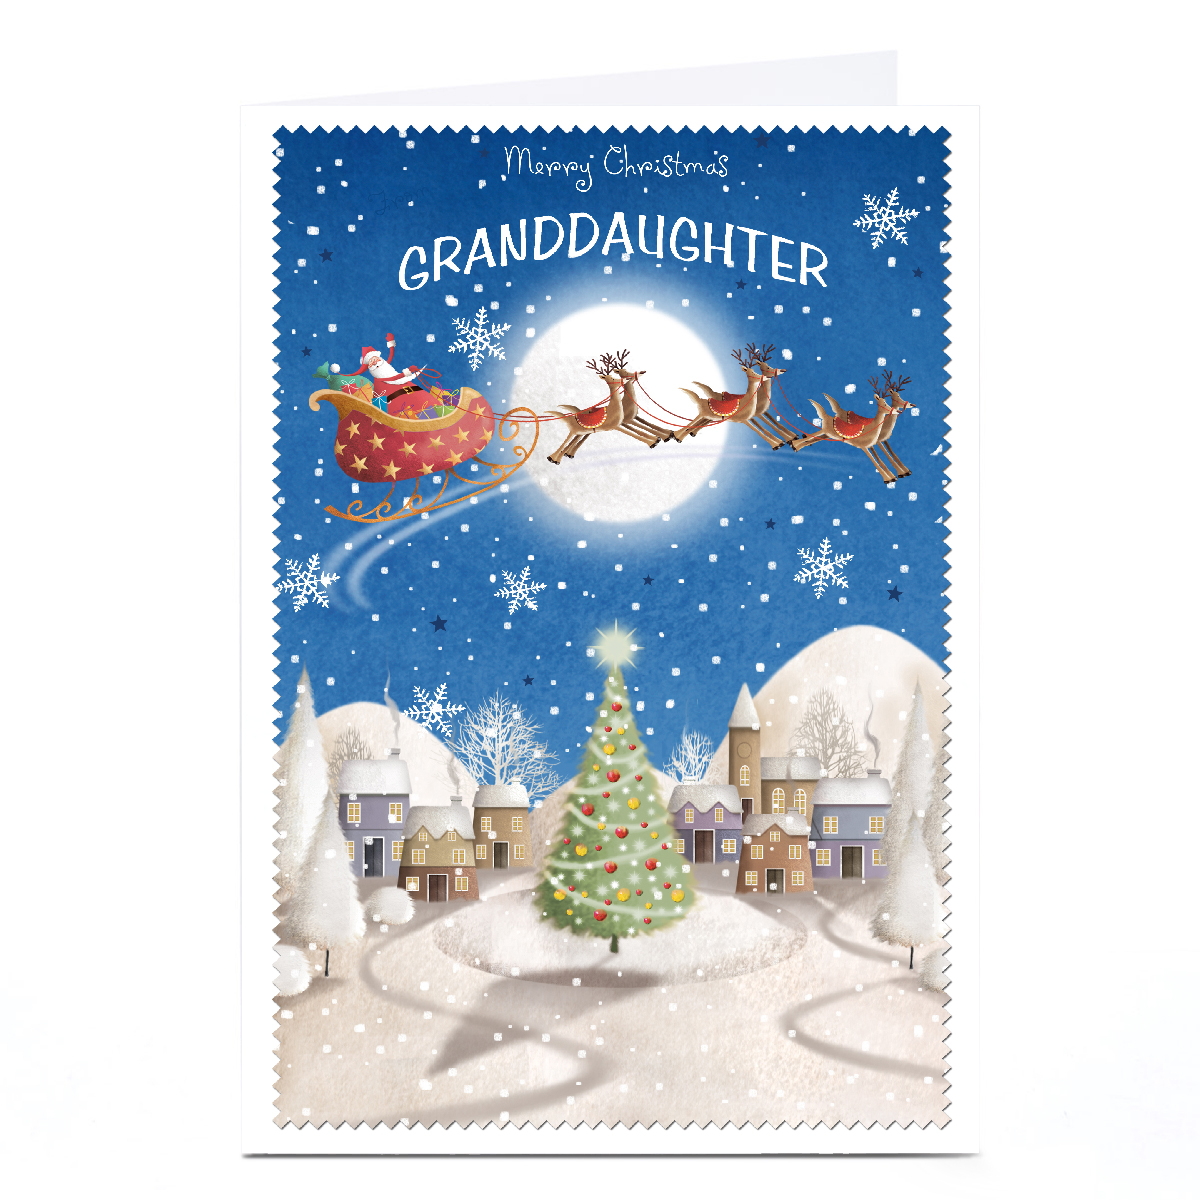 Personalised Christmas Card - Flying Santa's Sleigh, Granddaughter